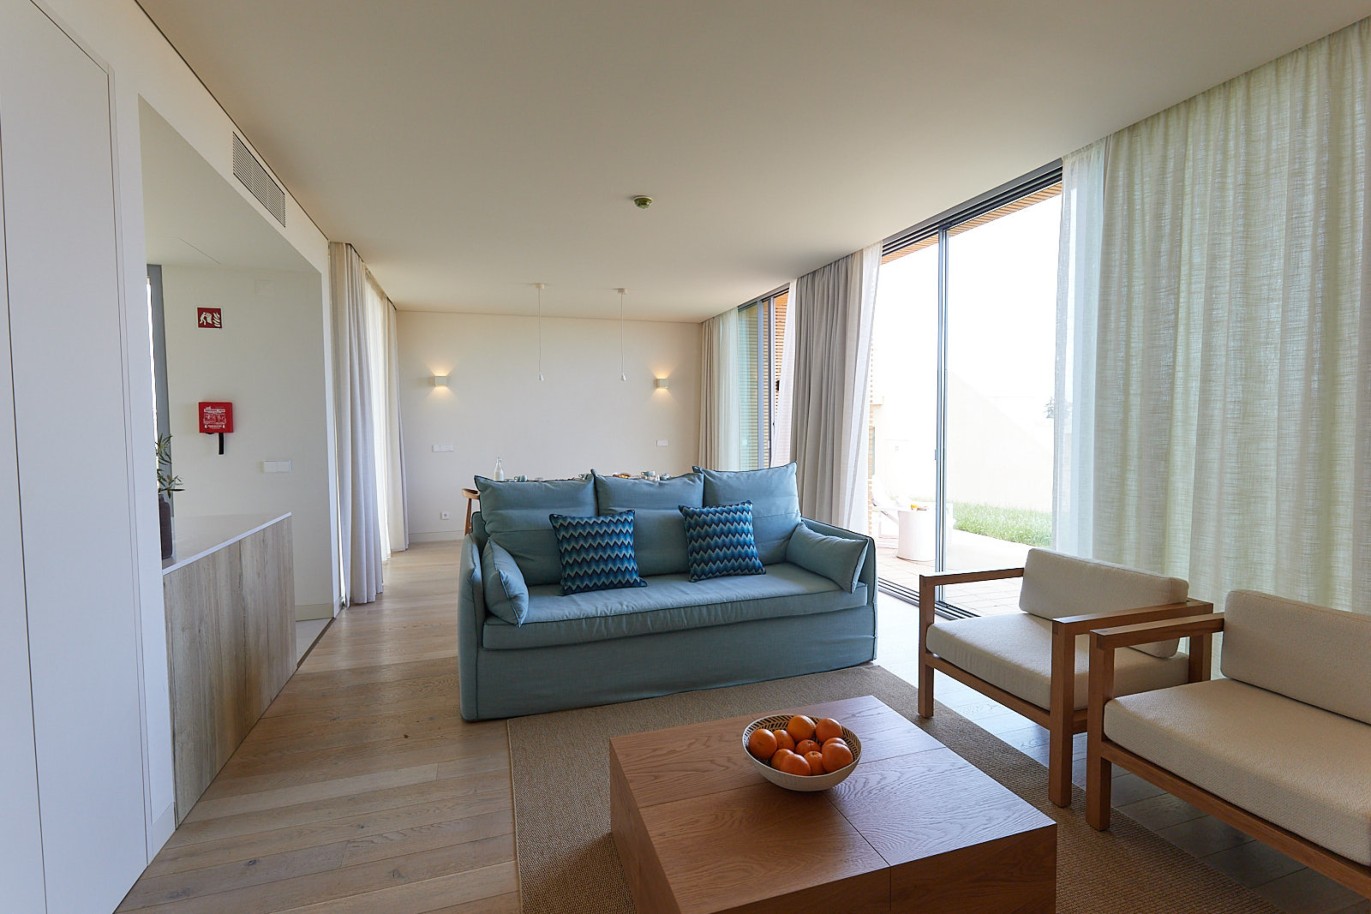 3 bedroom apartment in resort, for sale in Porches, Algarve_230742